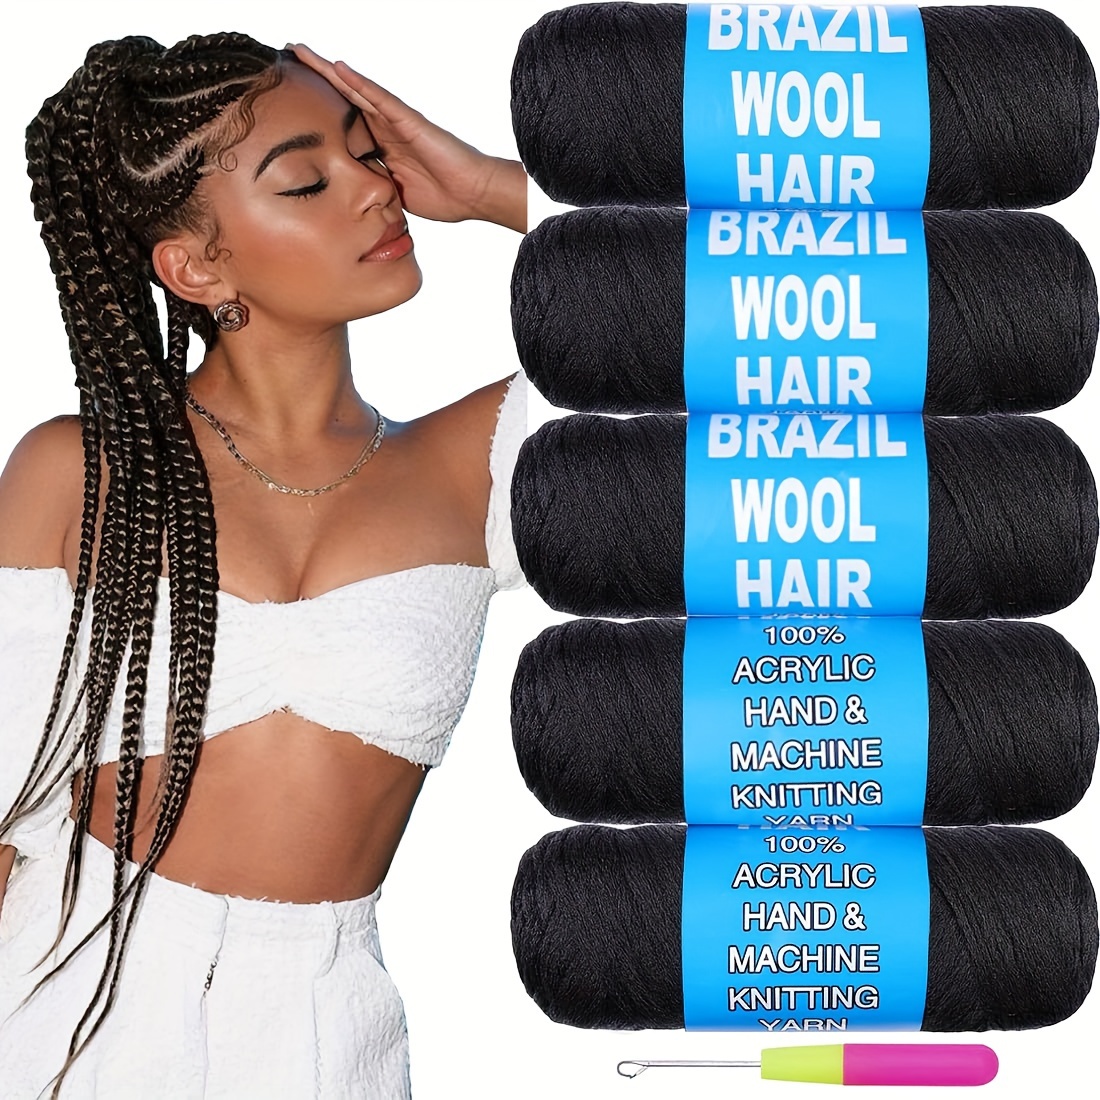 Brazilian Yarn Wool Hair for Braids Braiding Hair with Yarn 100% Acrylic  Brazilian Wool Hair for African Crochet Braided Hair Senegalese Twist Box  Braids Faux Locs with Yarn Hair (Pack of 5